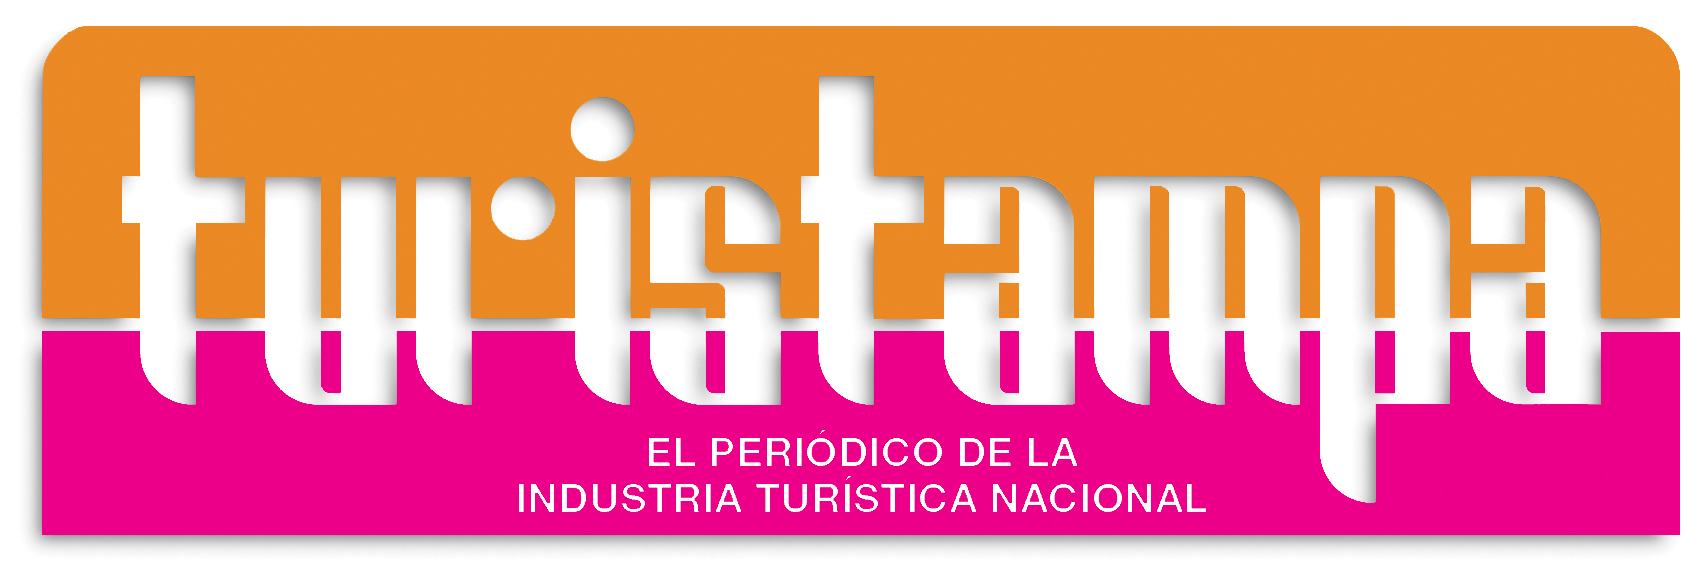 Turistampa logo update may 2015.jpg